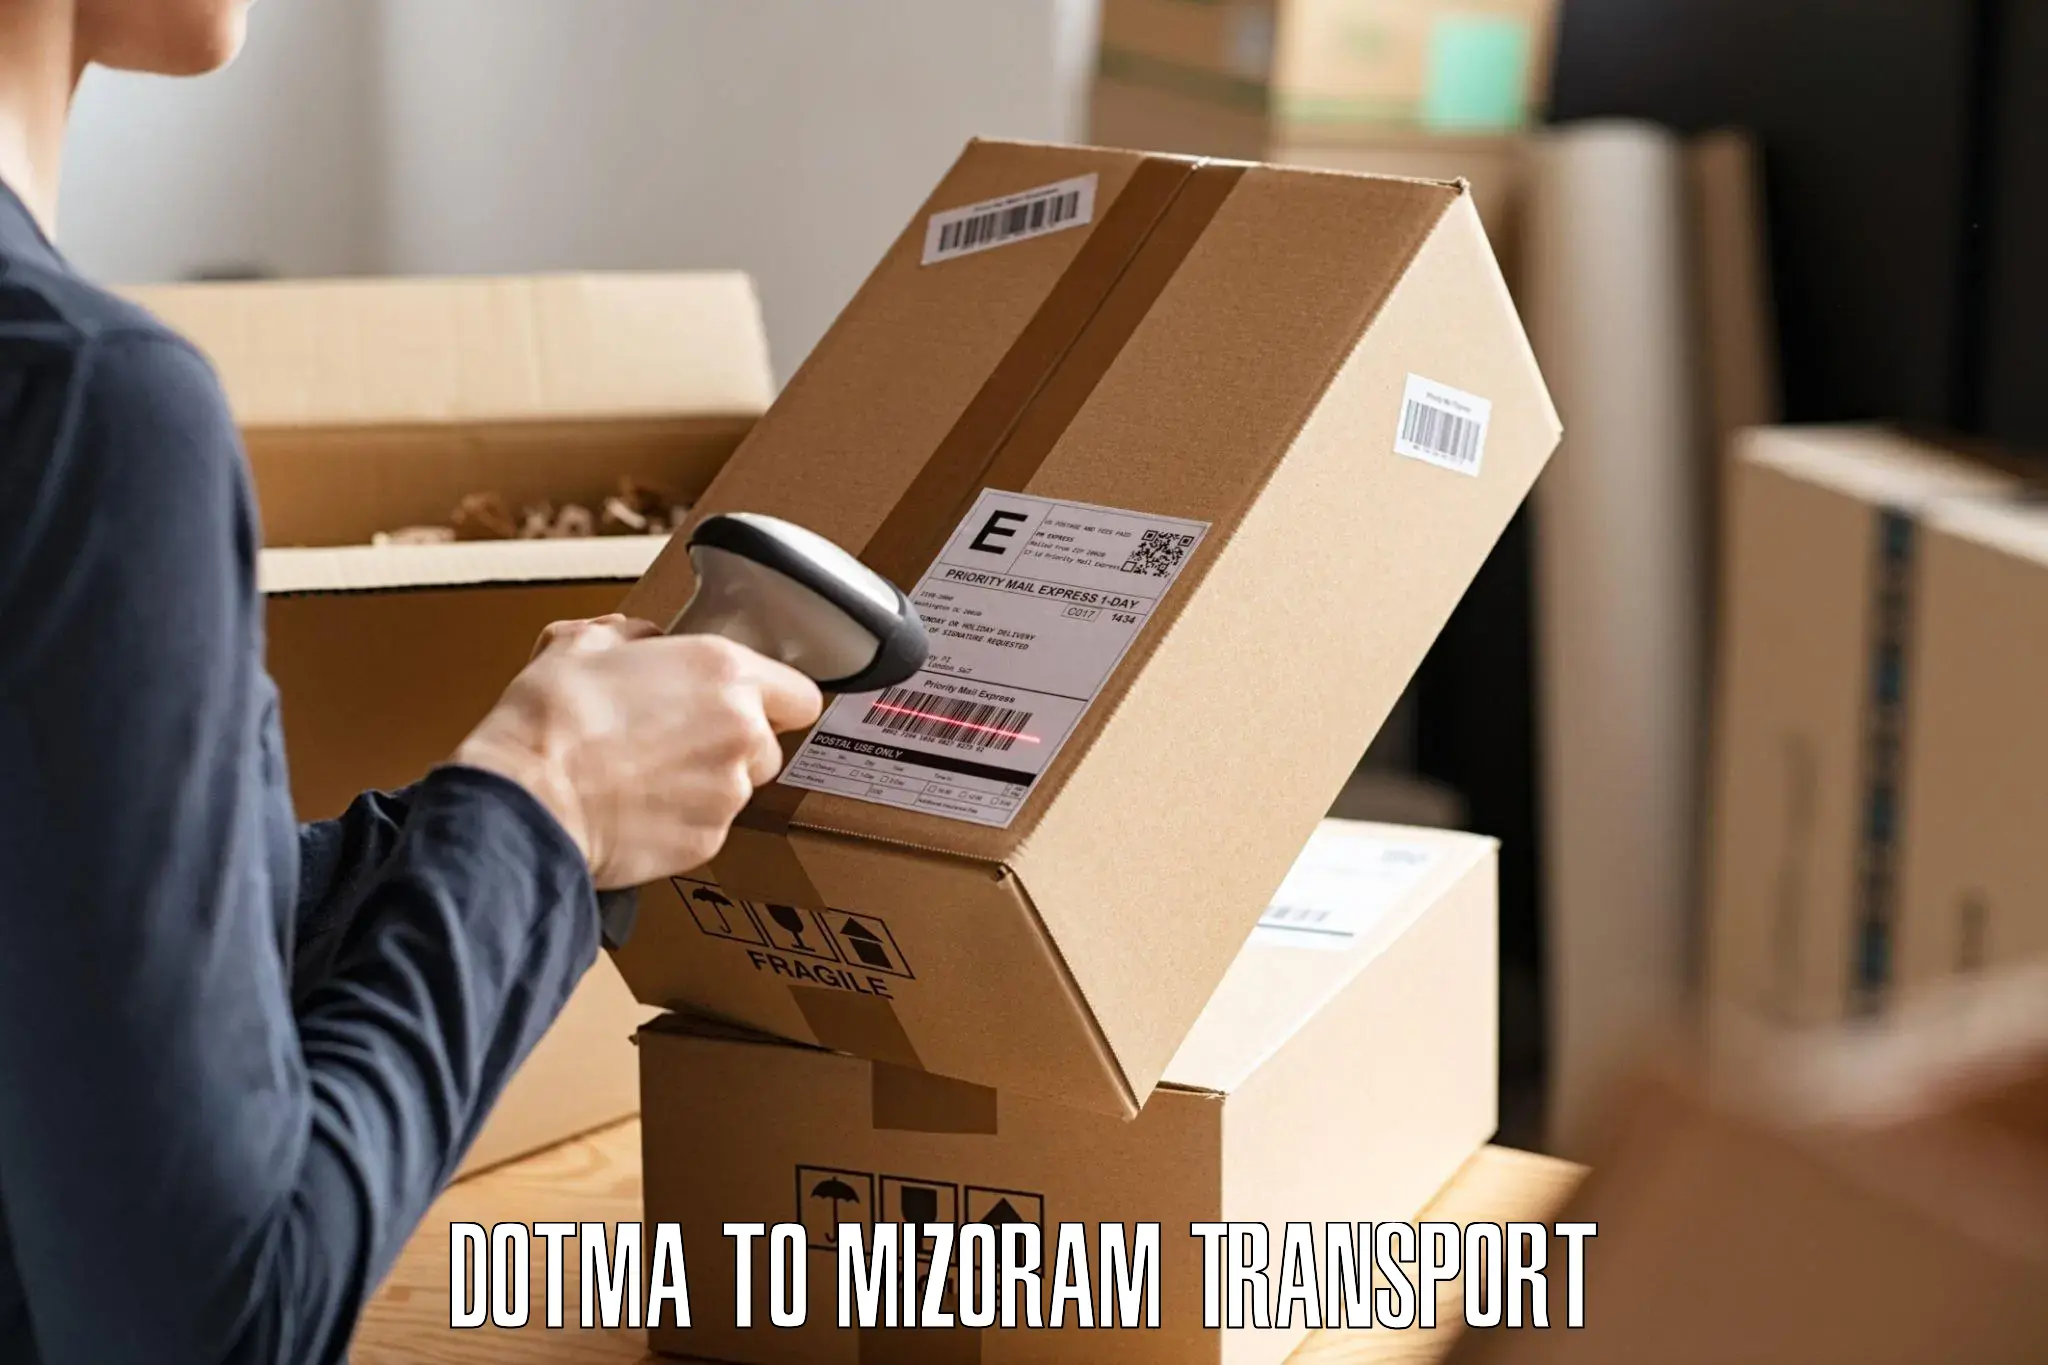 Express transport services Dotma to Mizoram